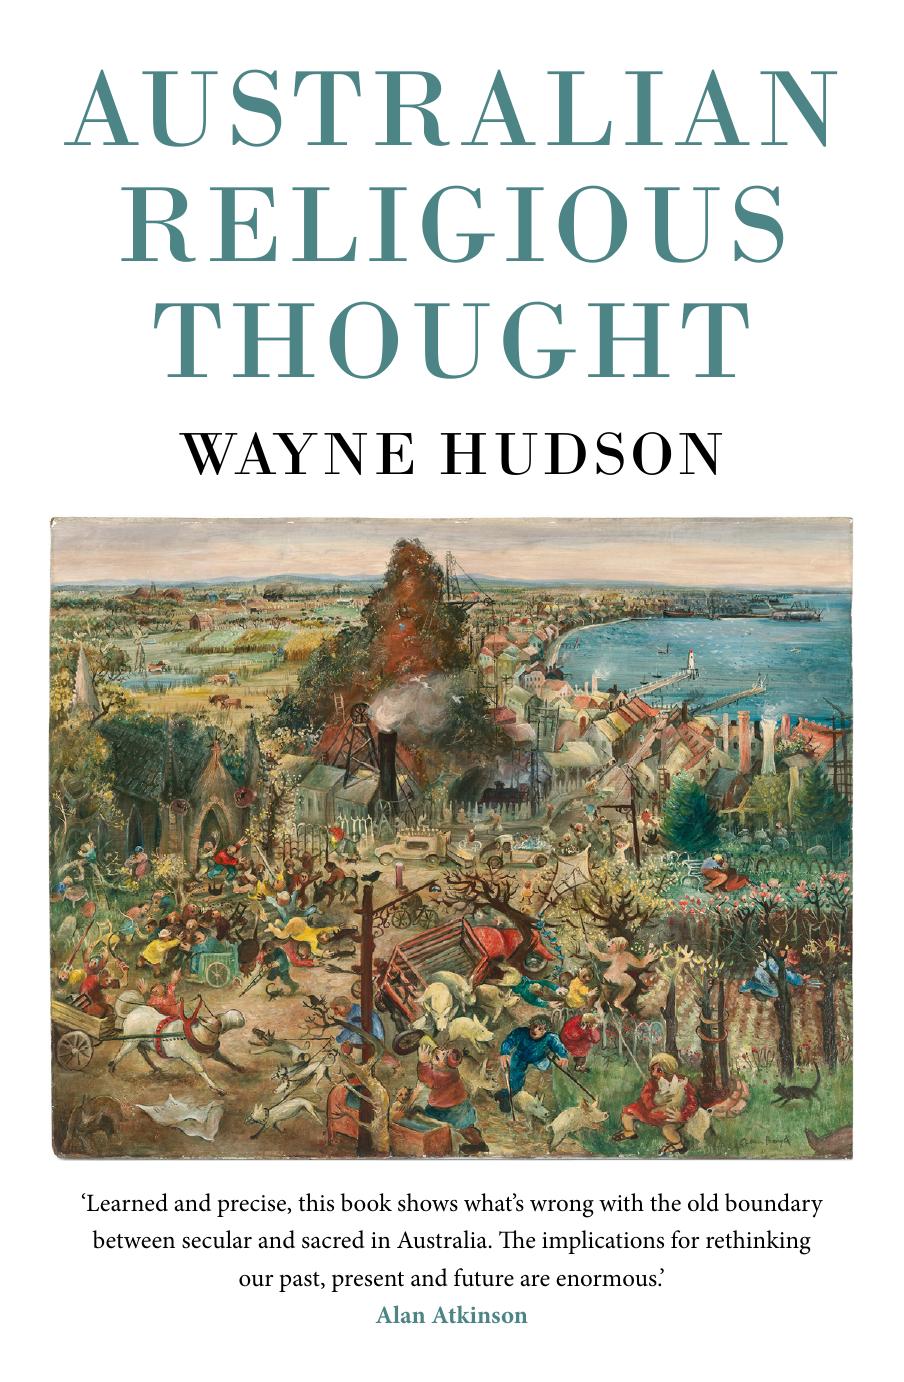 Australian Religious Thought by Wayne Hudson